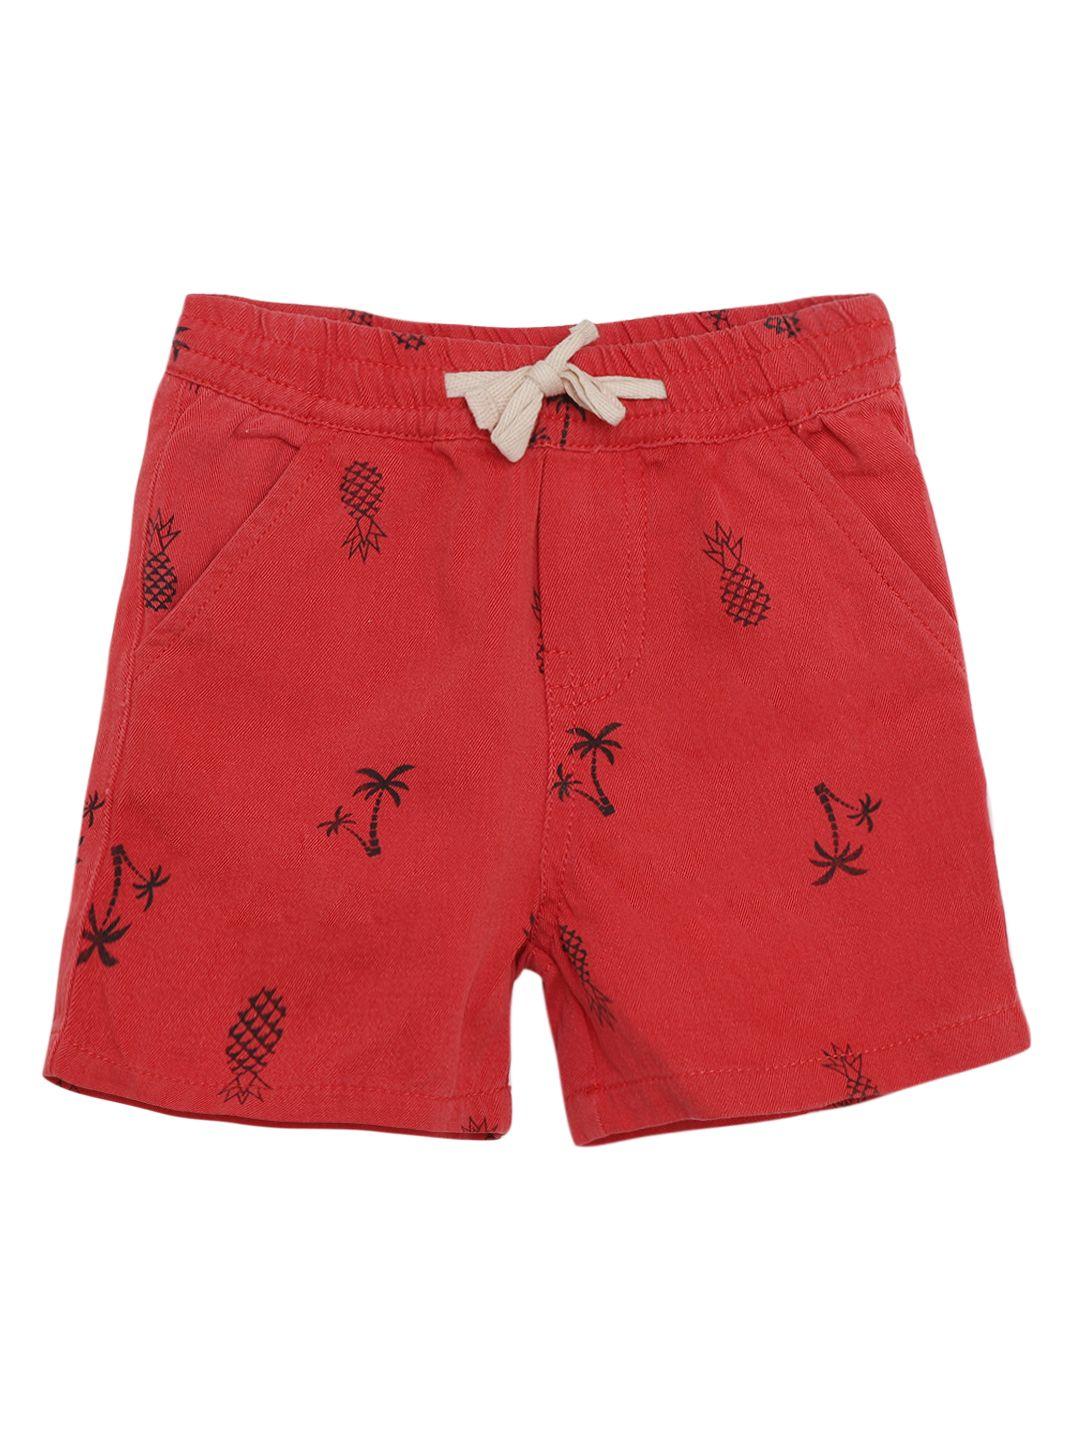 nauti nati boys red & black cotton printed regular fit shorts